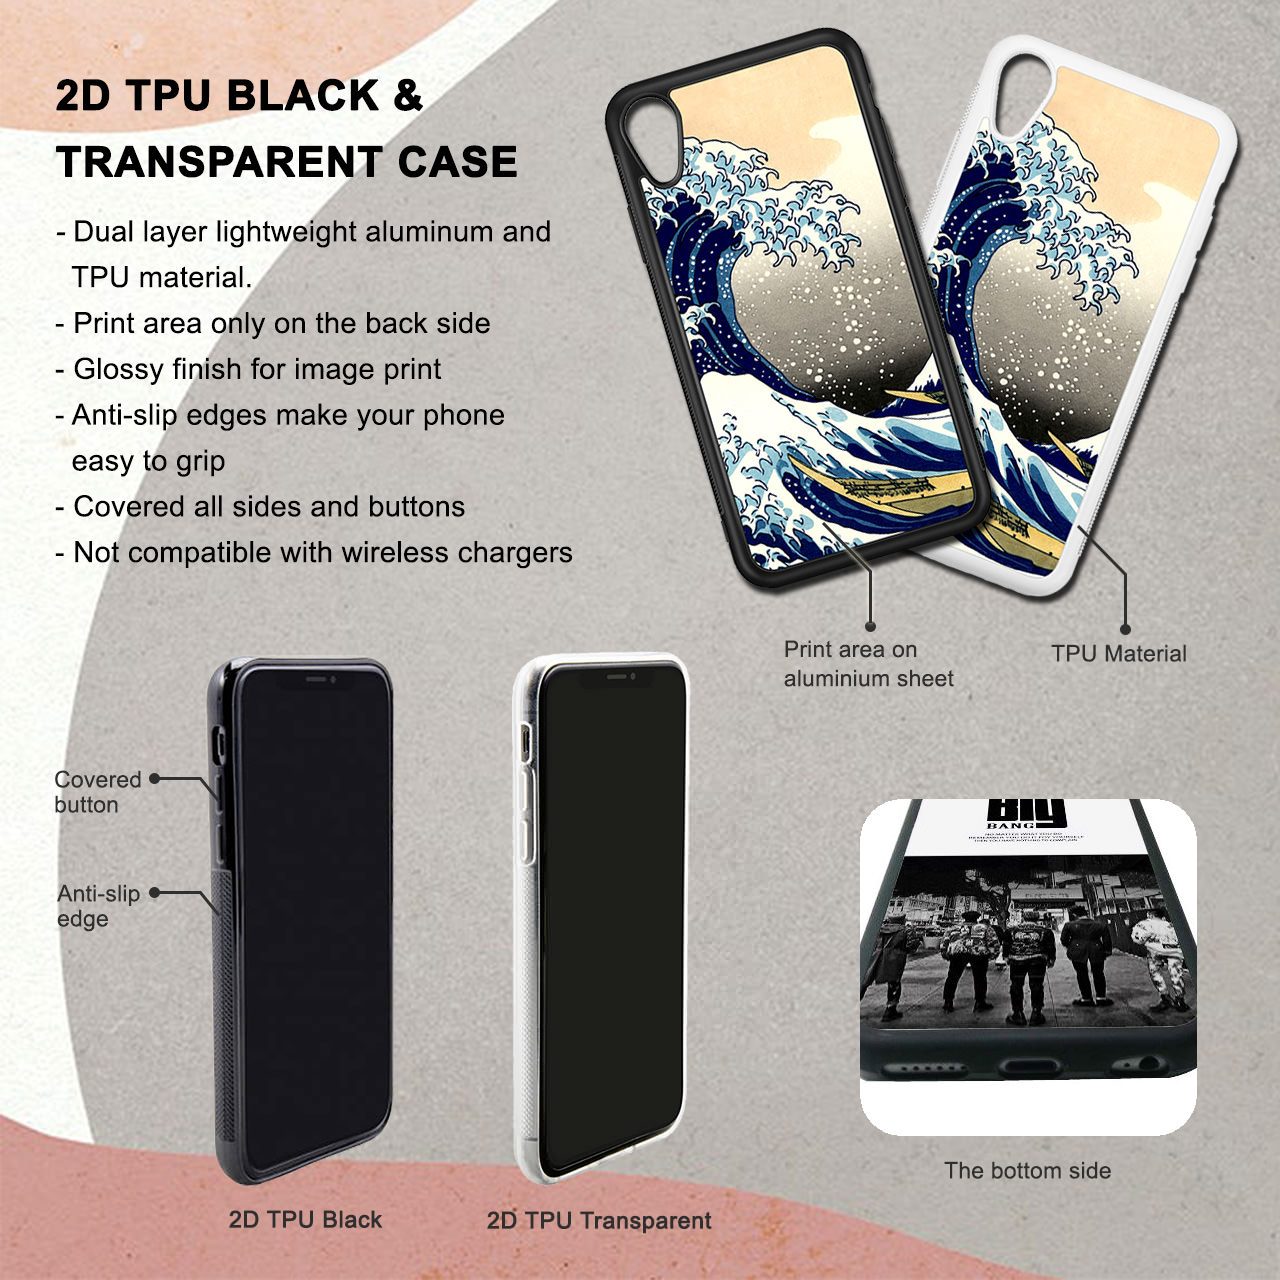 Blue Wave Marble iPhone 6 / 6s Plus Case